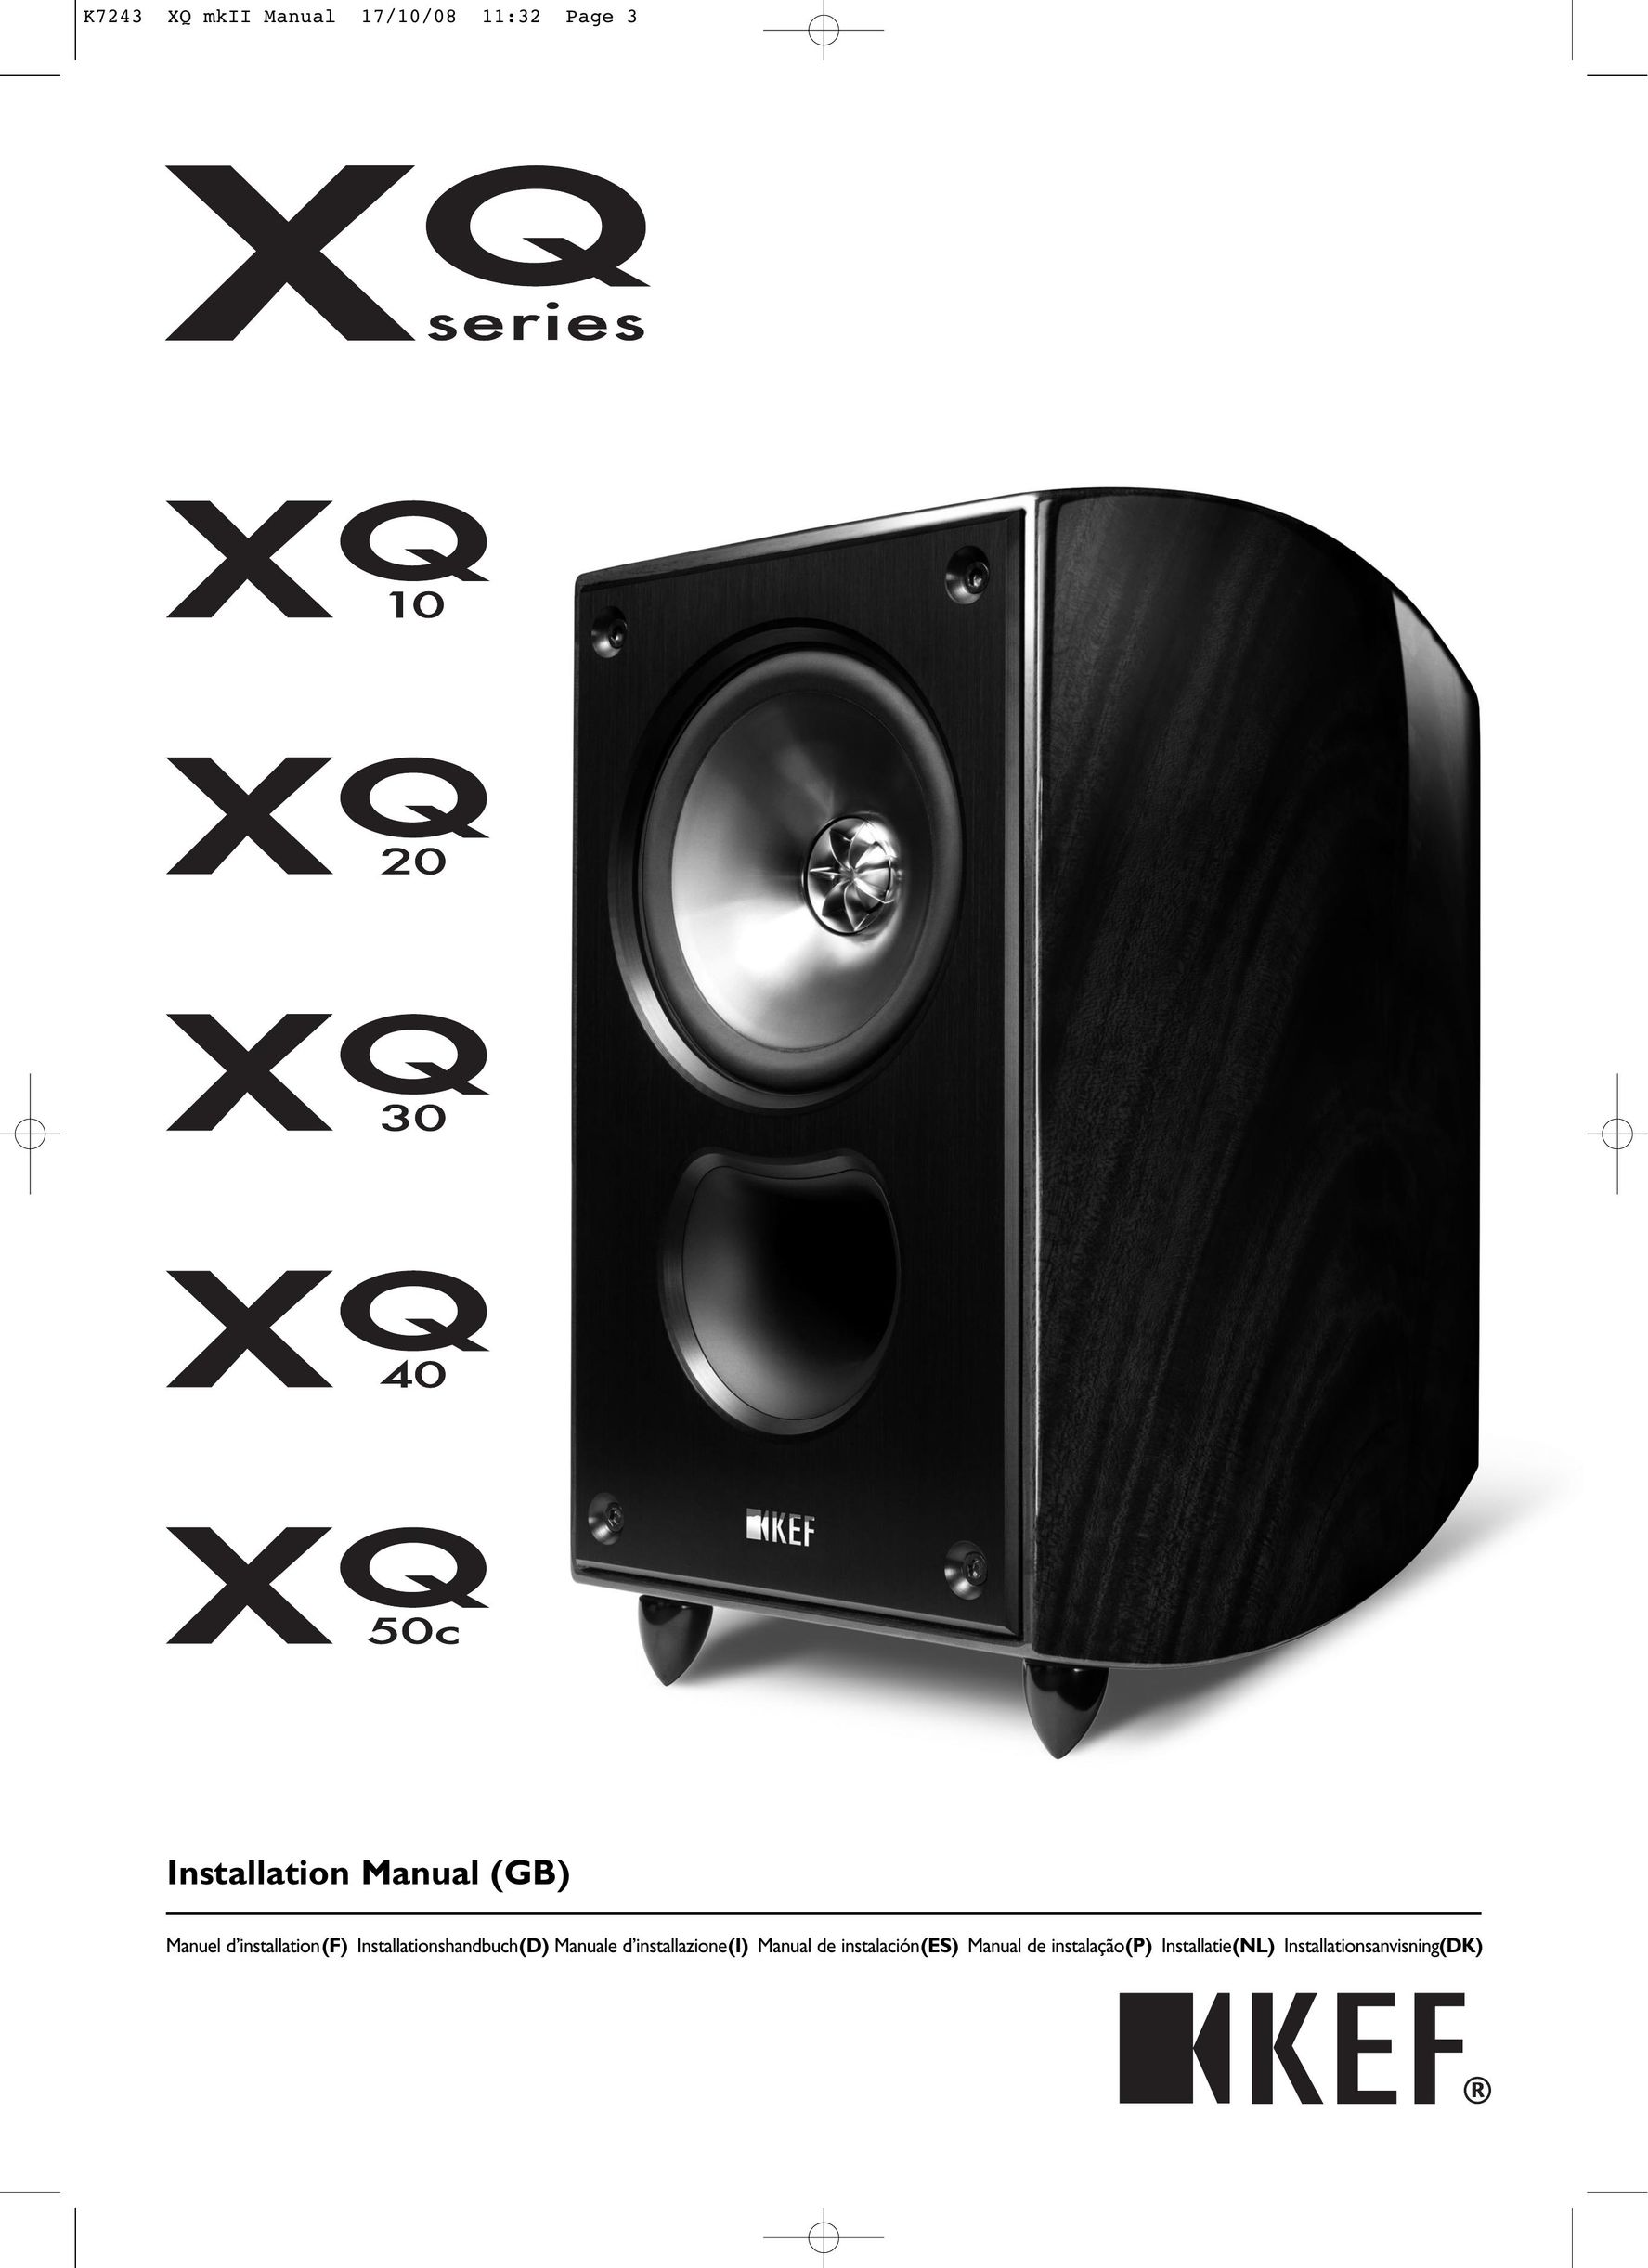 KEF Audio XQ40 Speaker User Manual